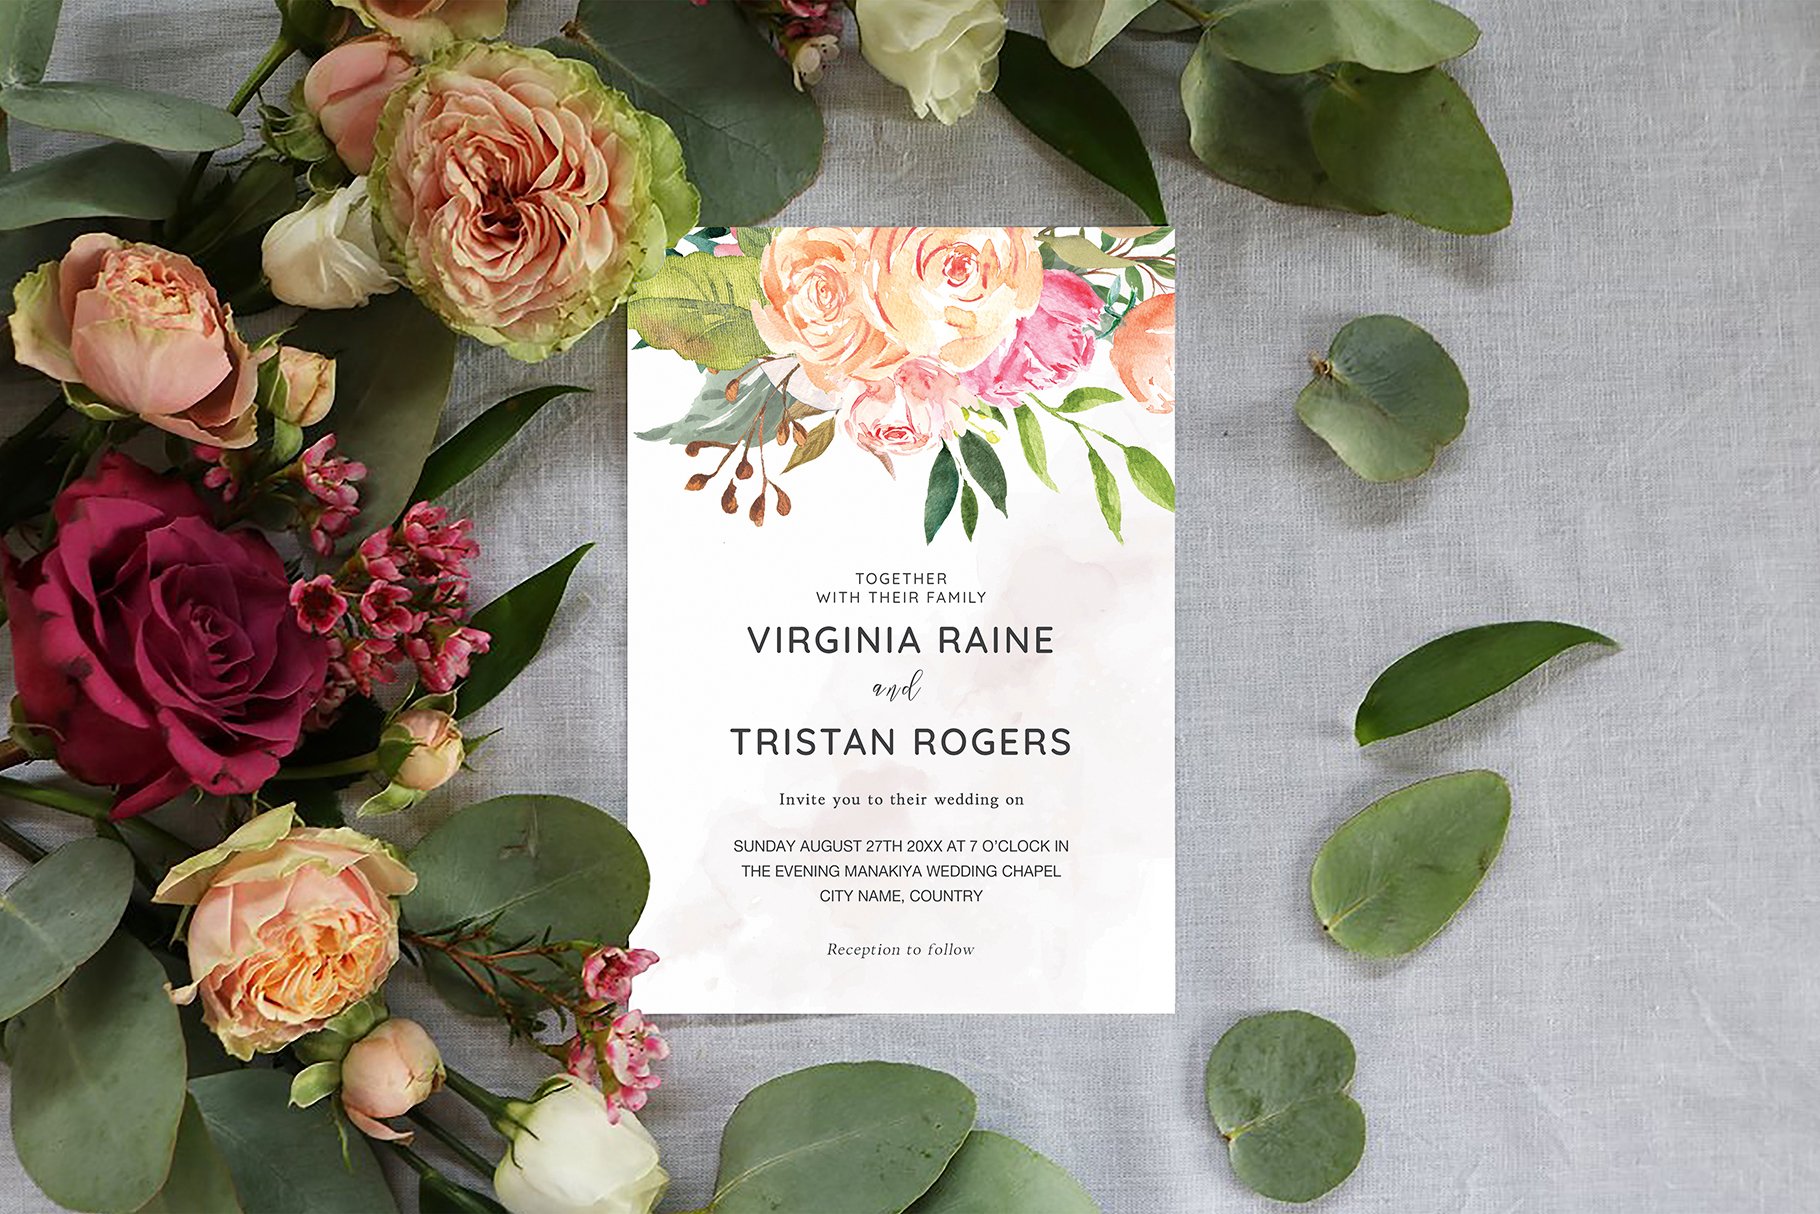 Watercolor Floral Wedding Invite cover image.